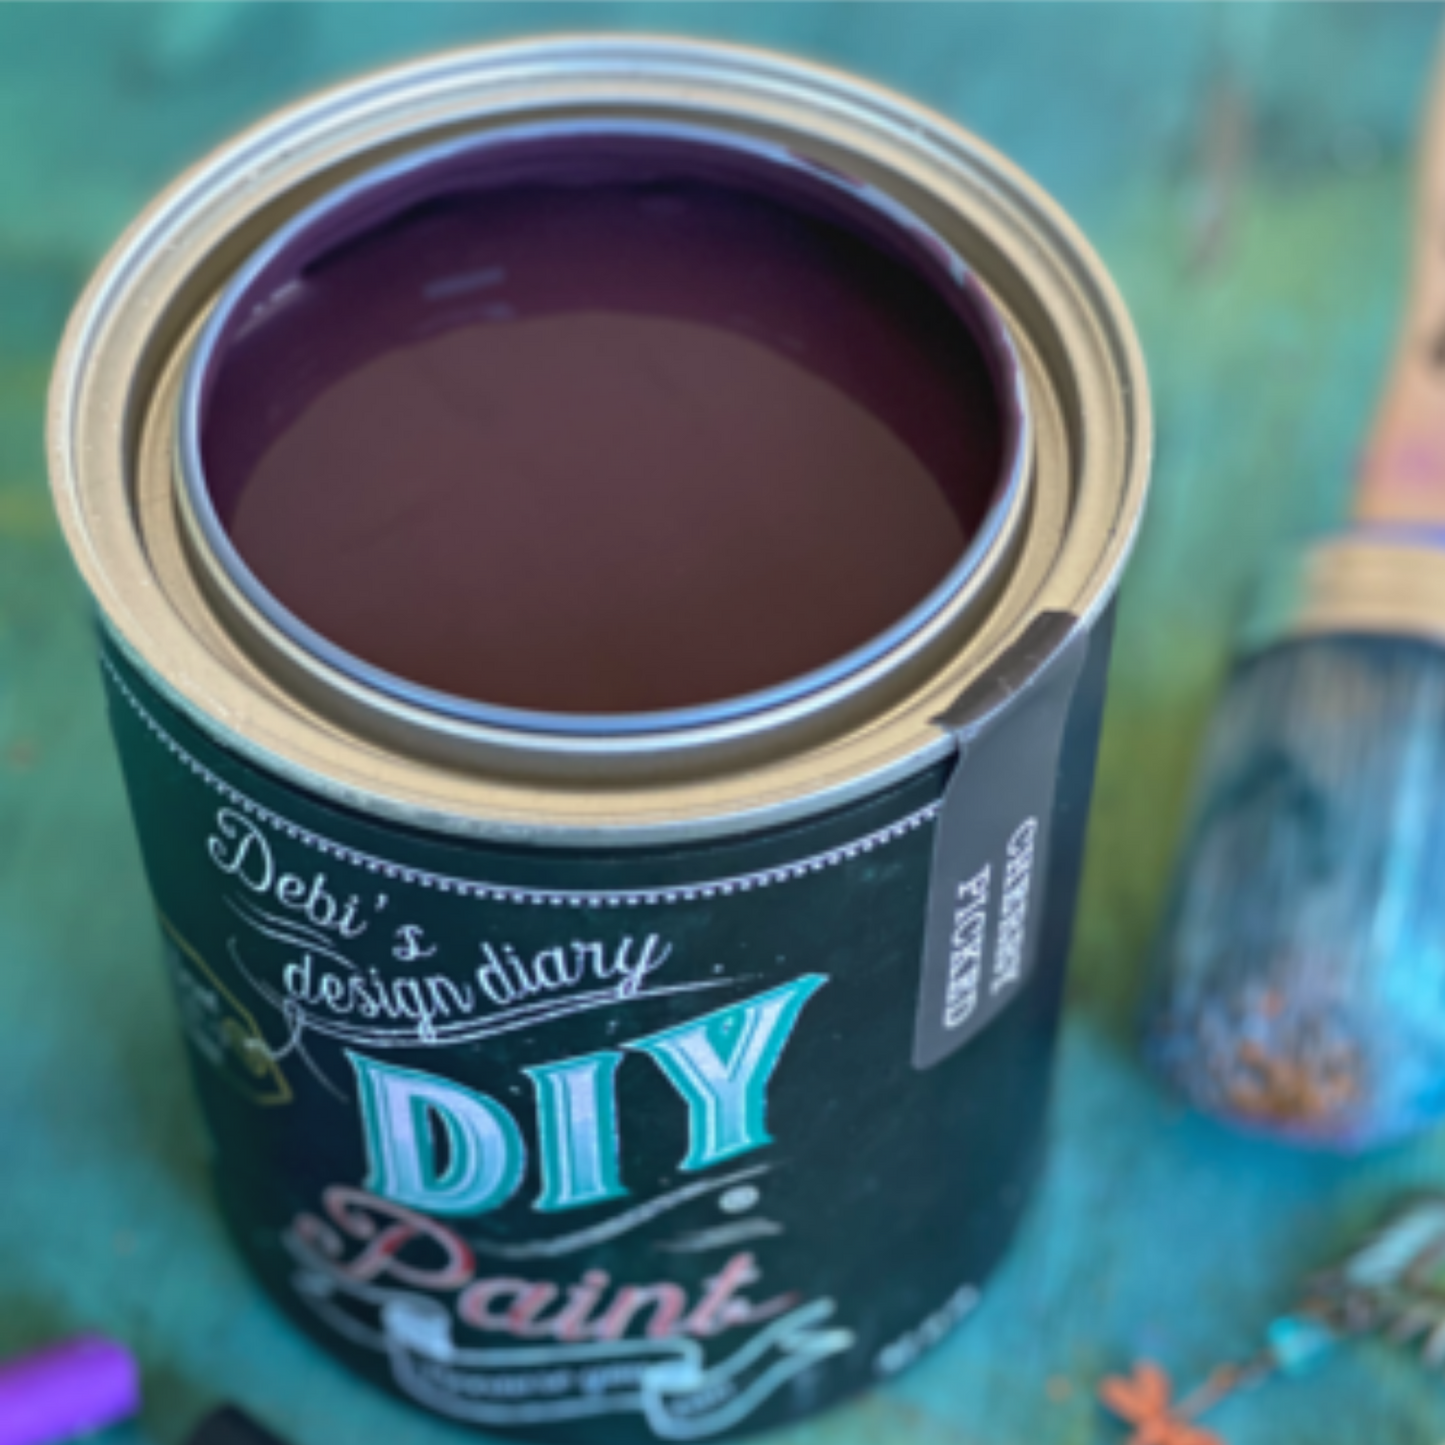 Debi's Design Diary DIY Paint in Cherry Picked at Milton's Daughter